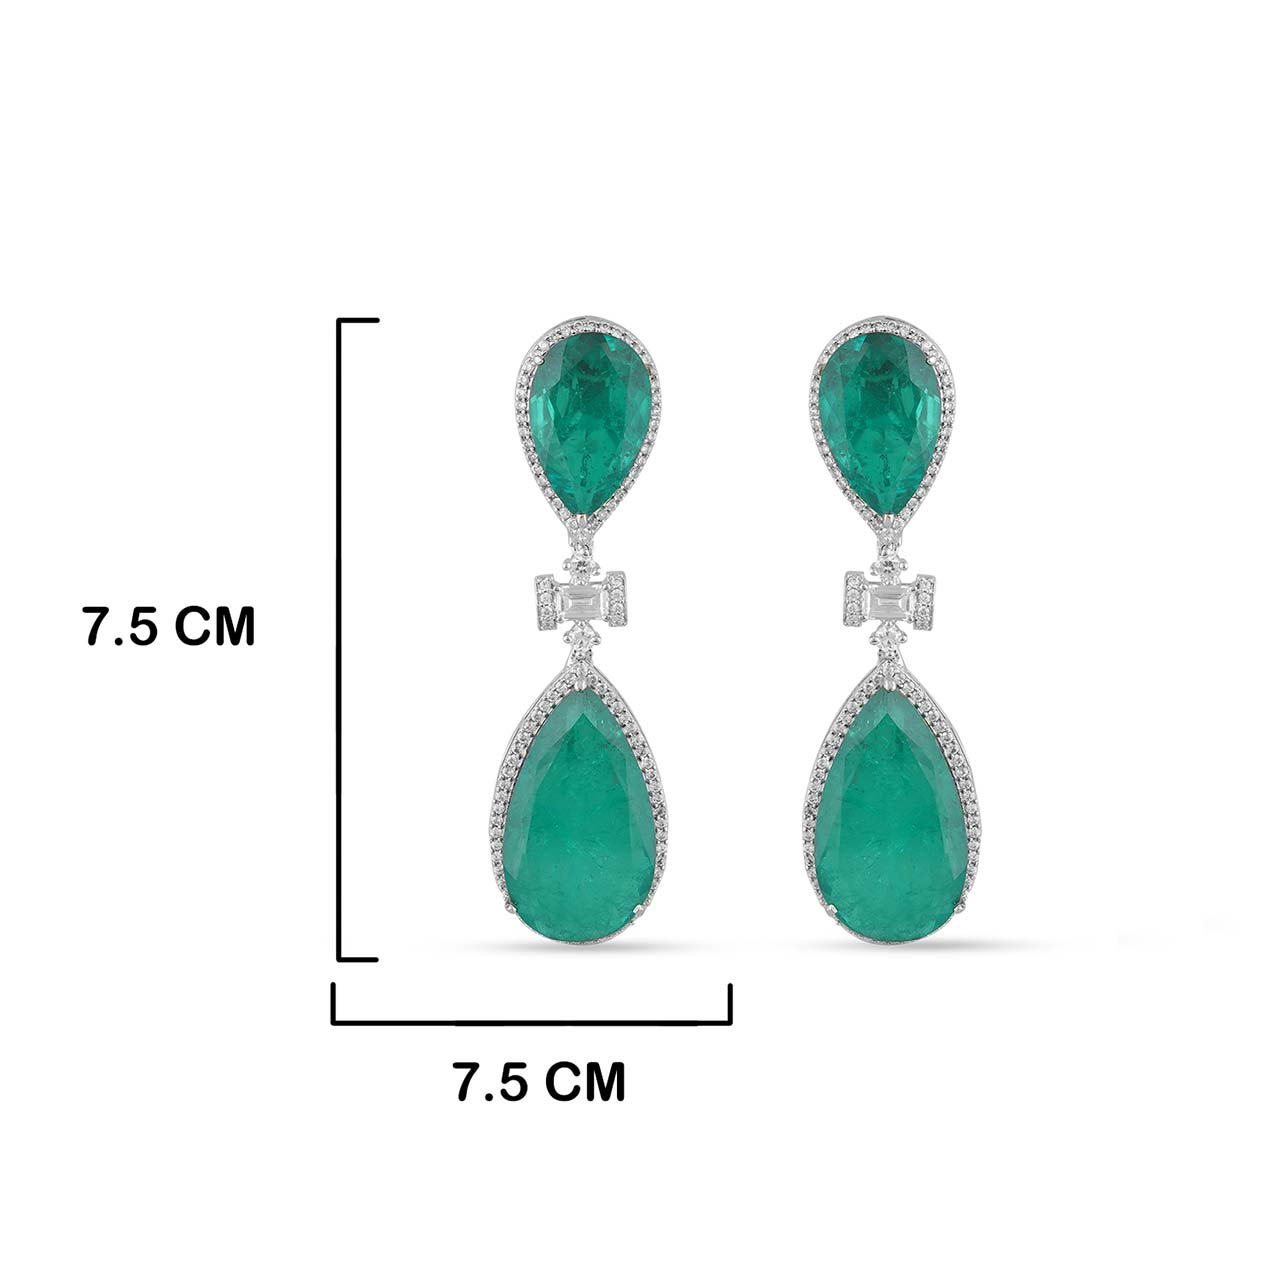 Emerald Green Cubic Zirconia Earrings with Measurements in cm